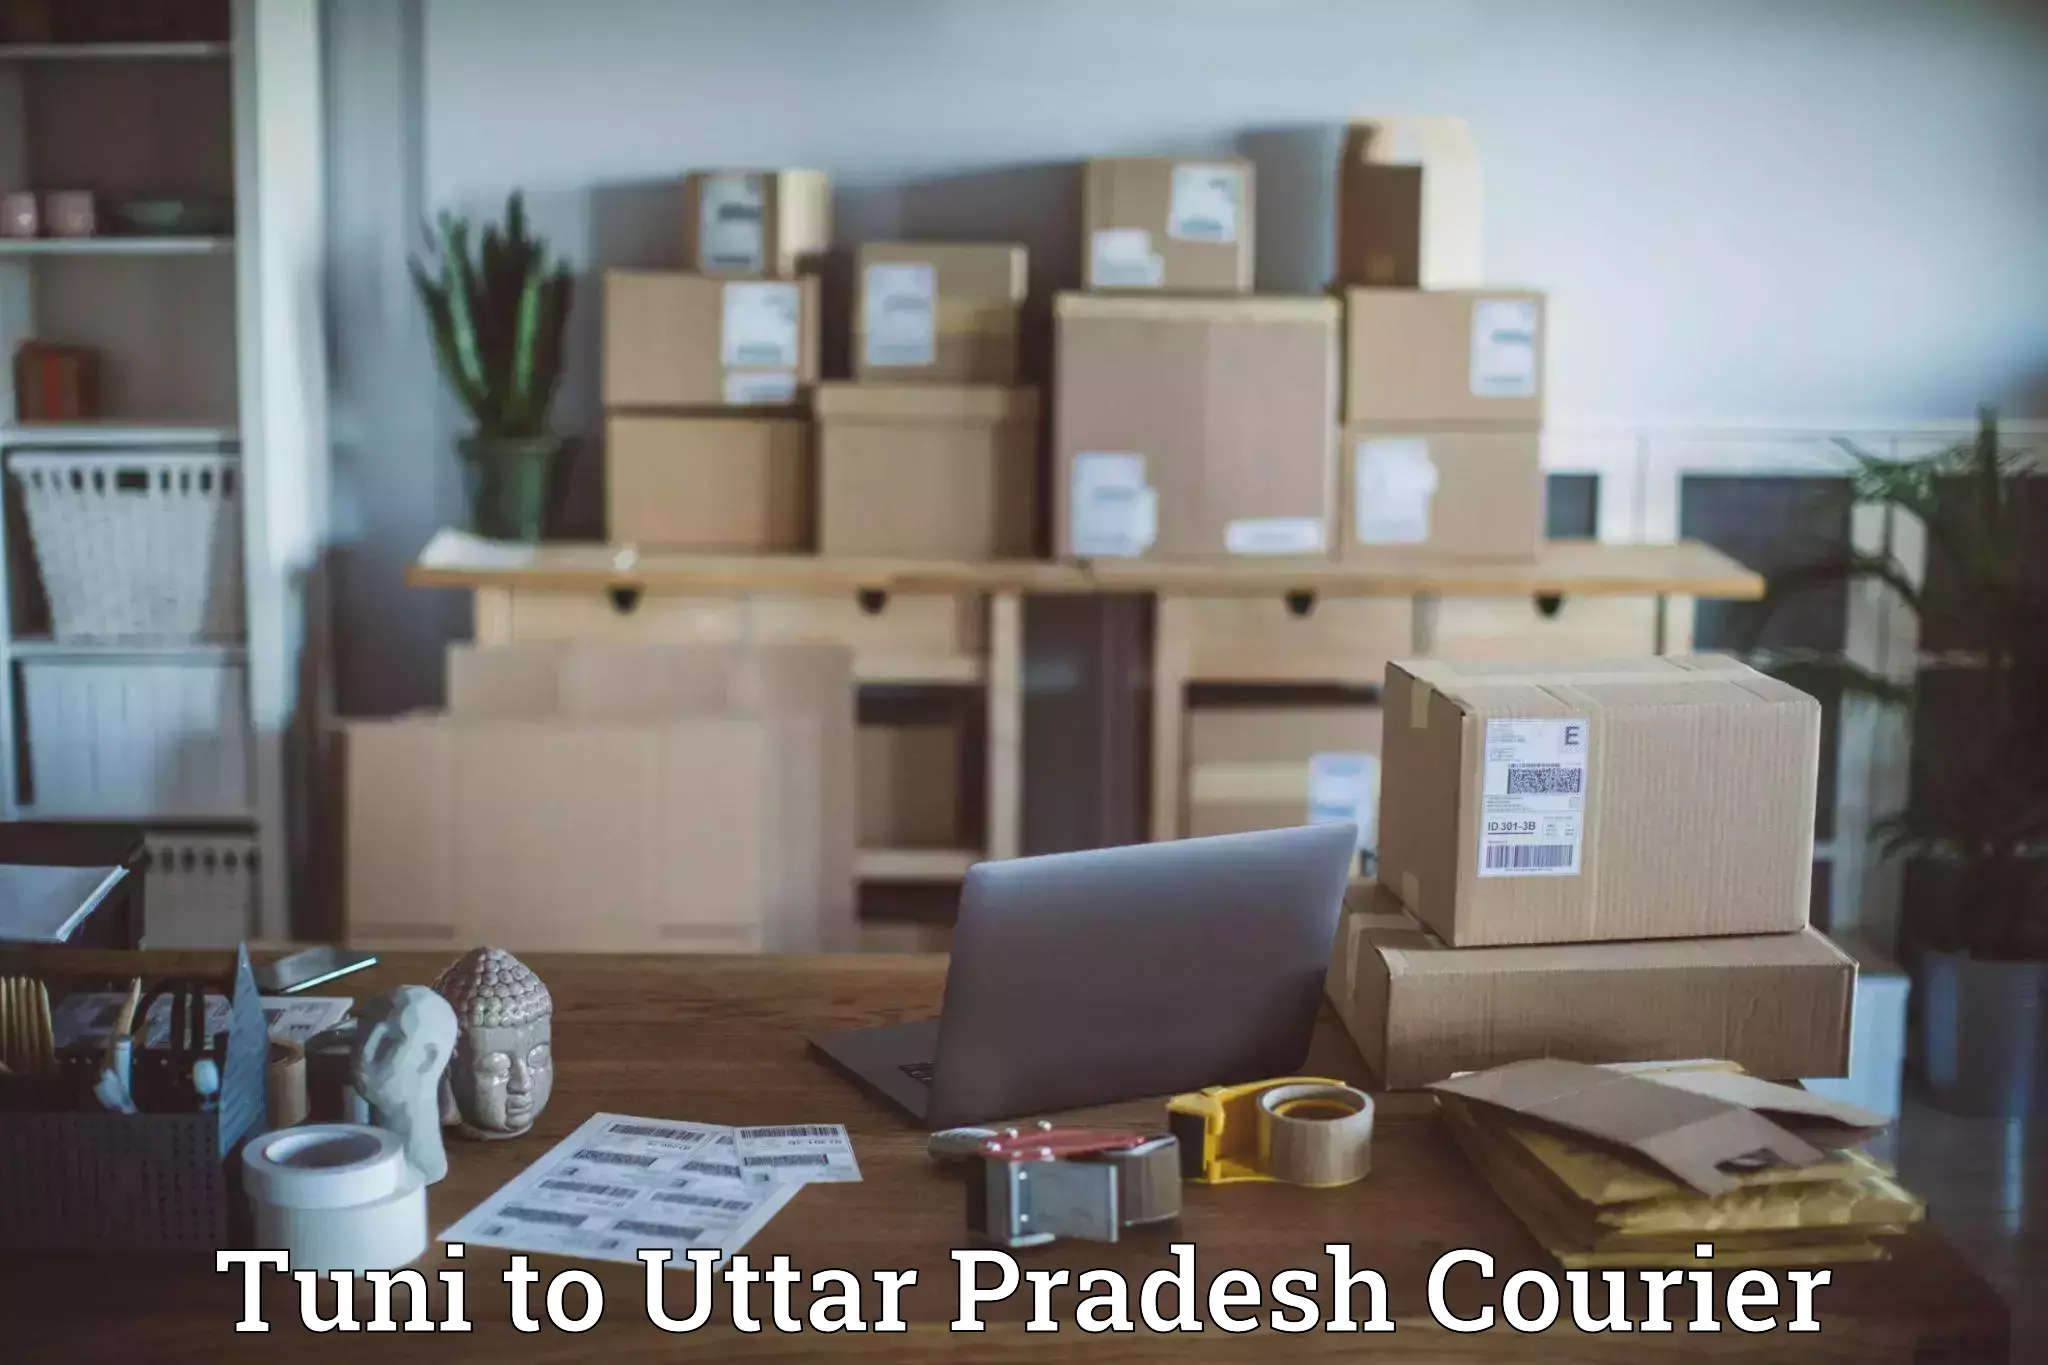 Courier service efficiency Tuni to Uttar Pradesh